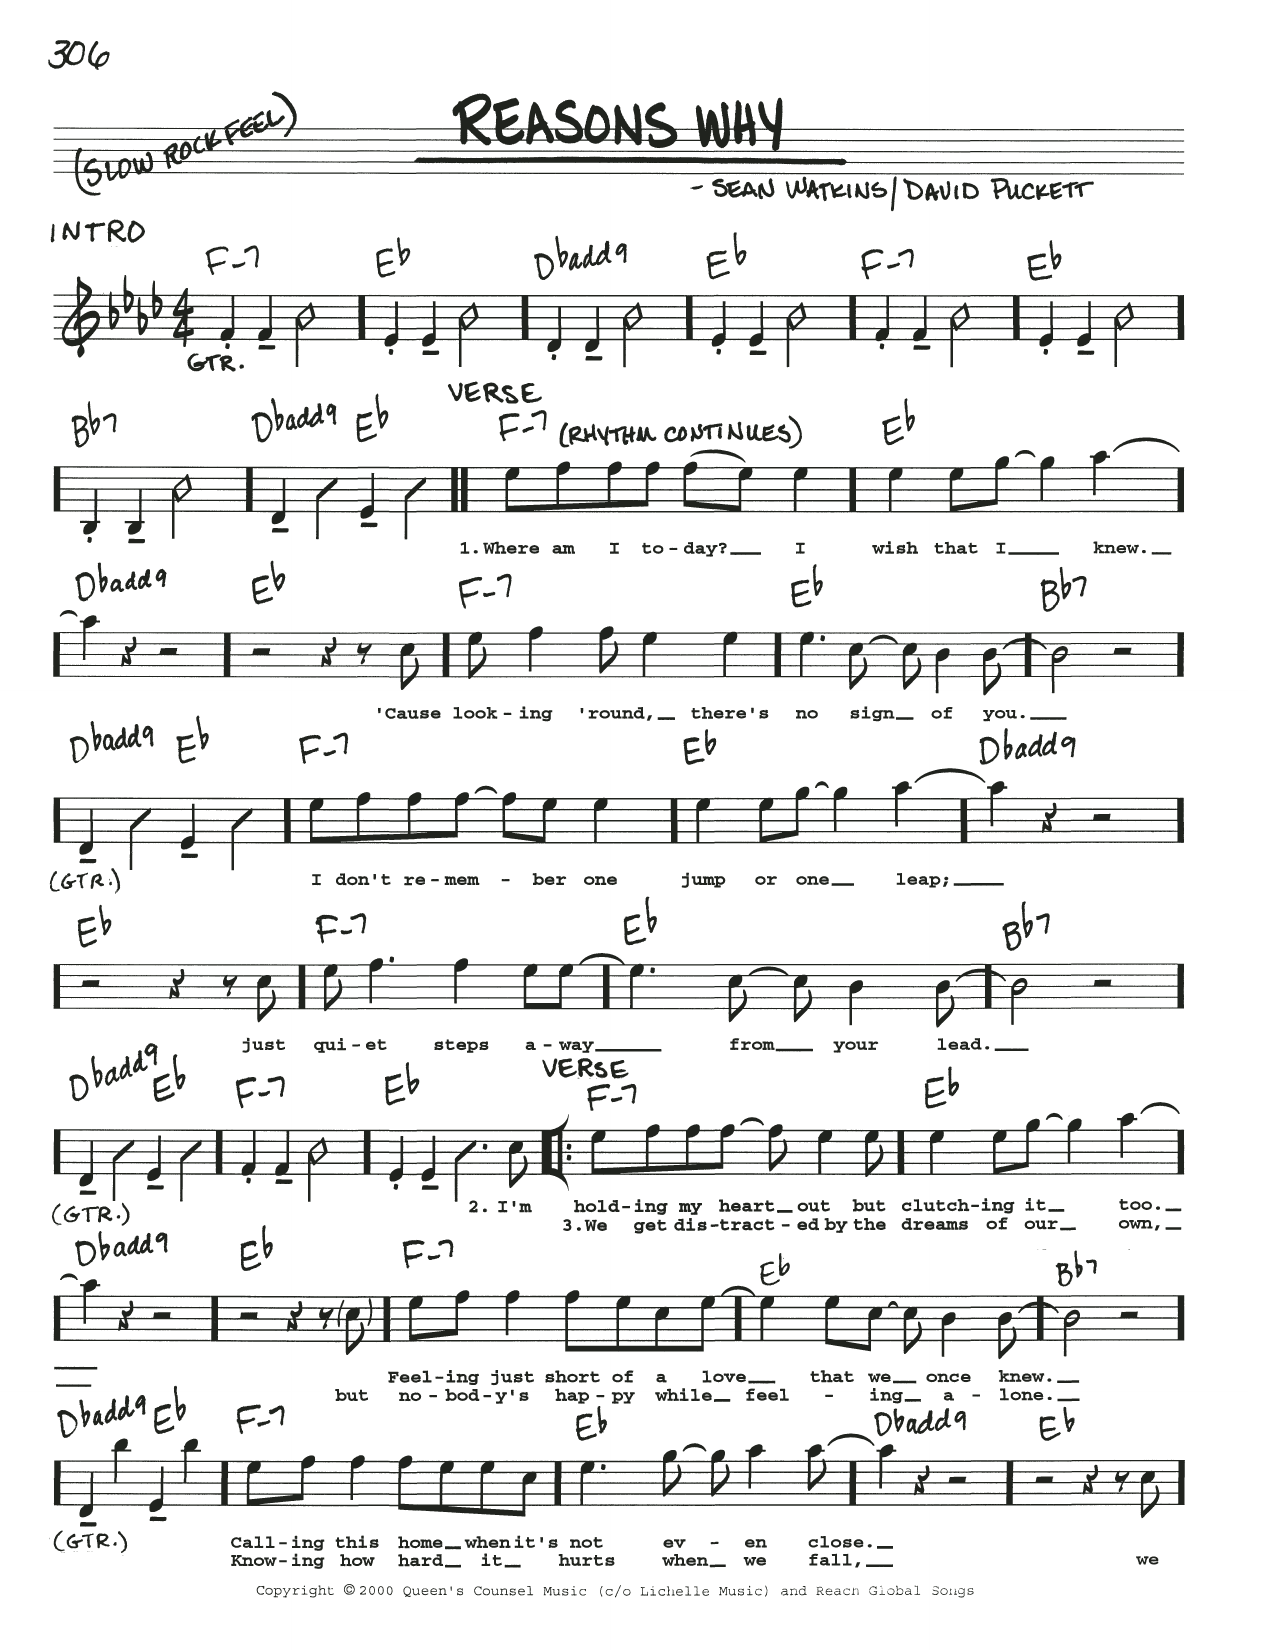 Nickel Creek Reasons Why Sheet Music Notes & Chords for Real Book – Melody, Lyrics & Chords - Download or Print PDF